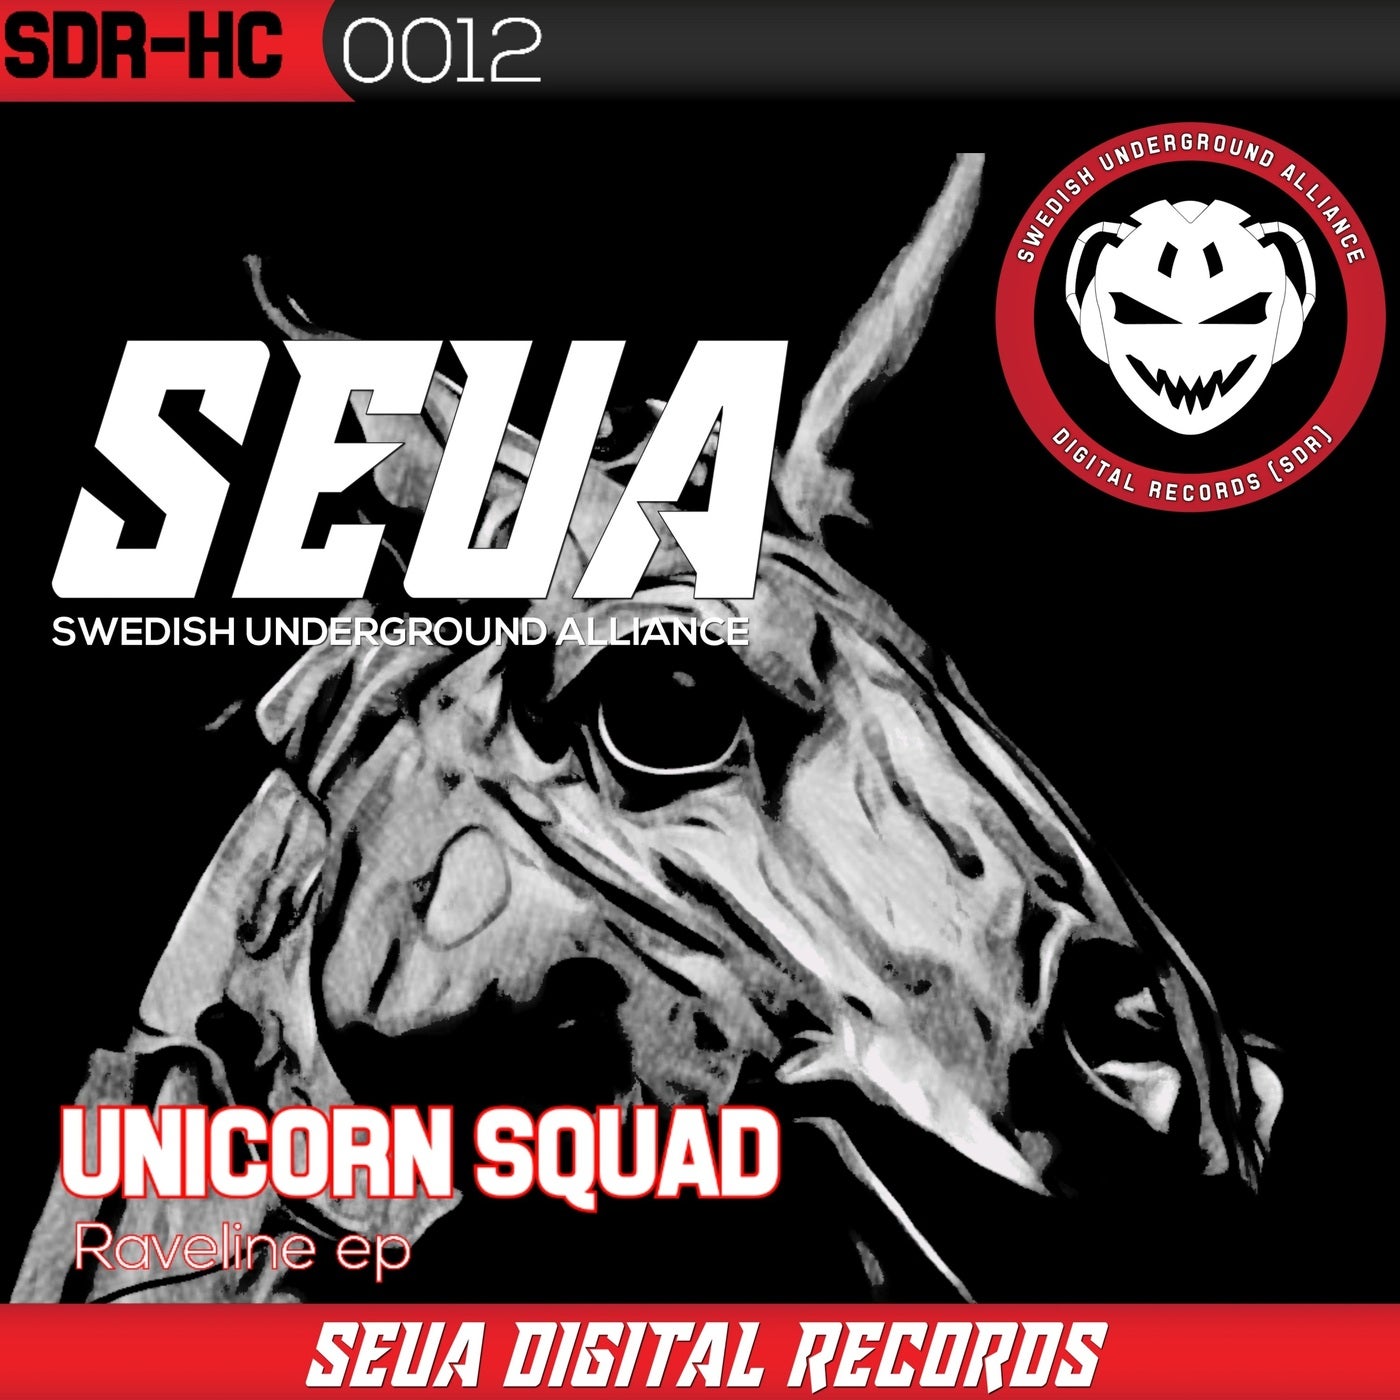 Unicorn Squad - Raveline [SEUA Digital Records]